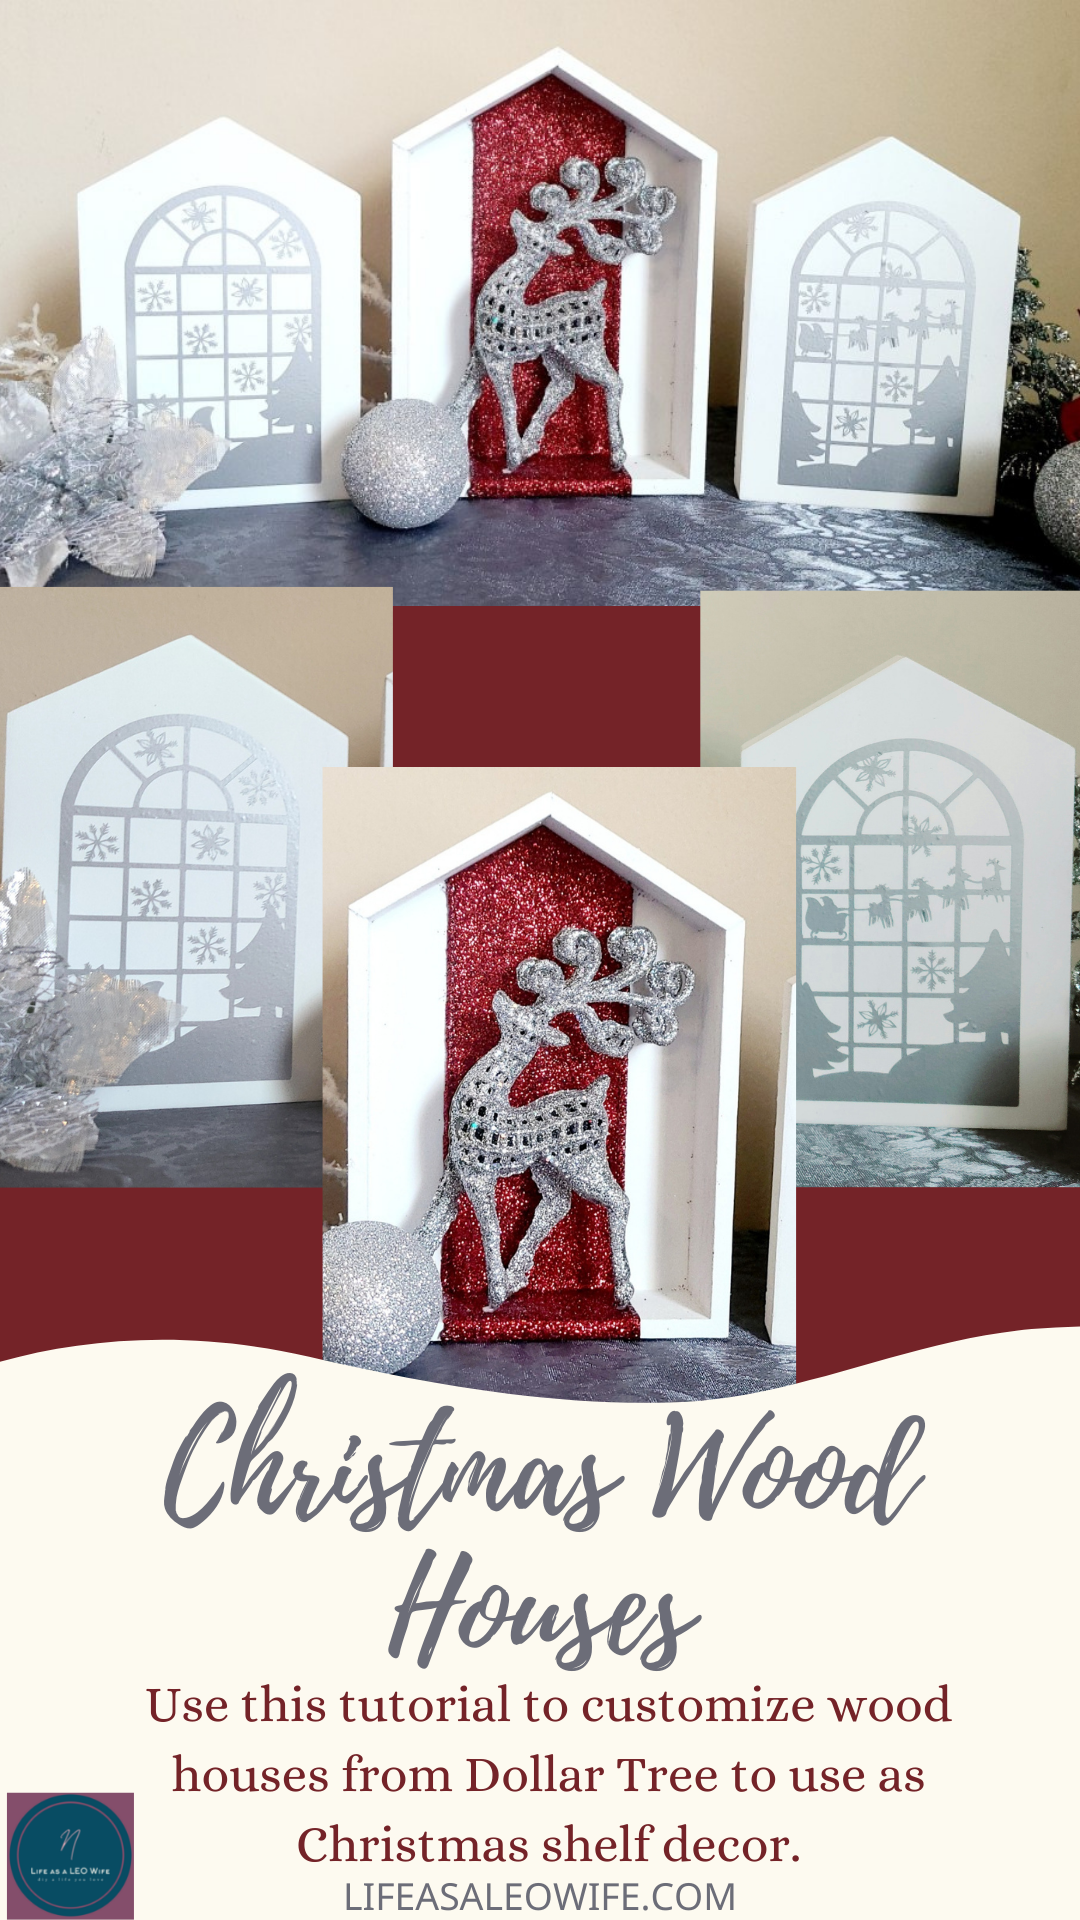 Christmas wood house photo mockup.